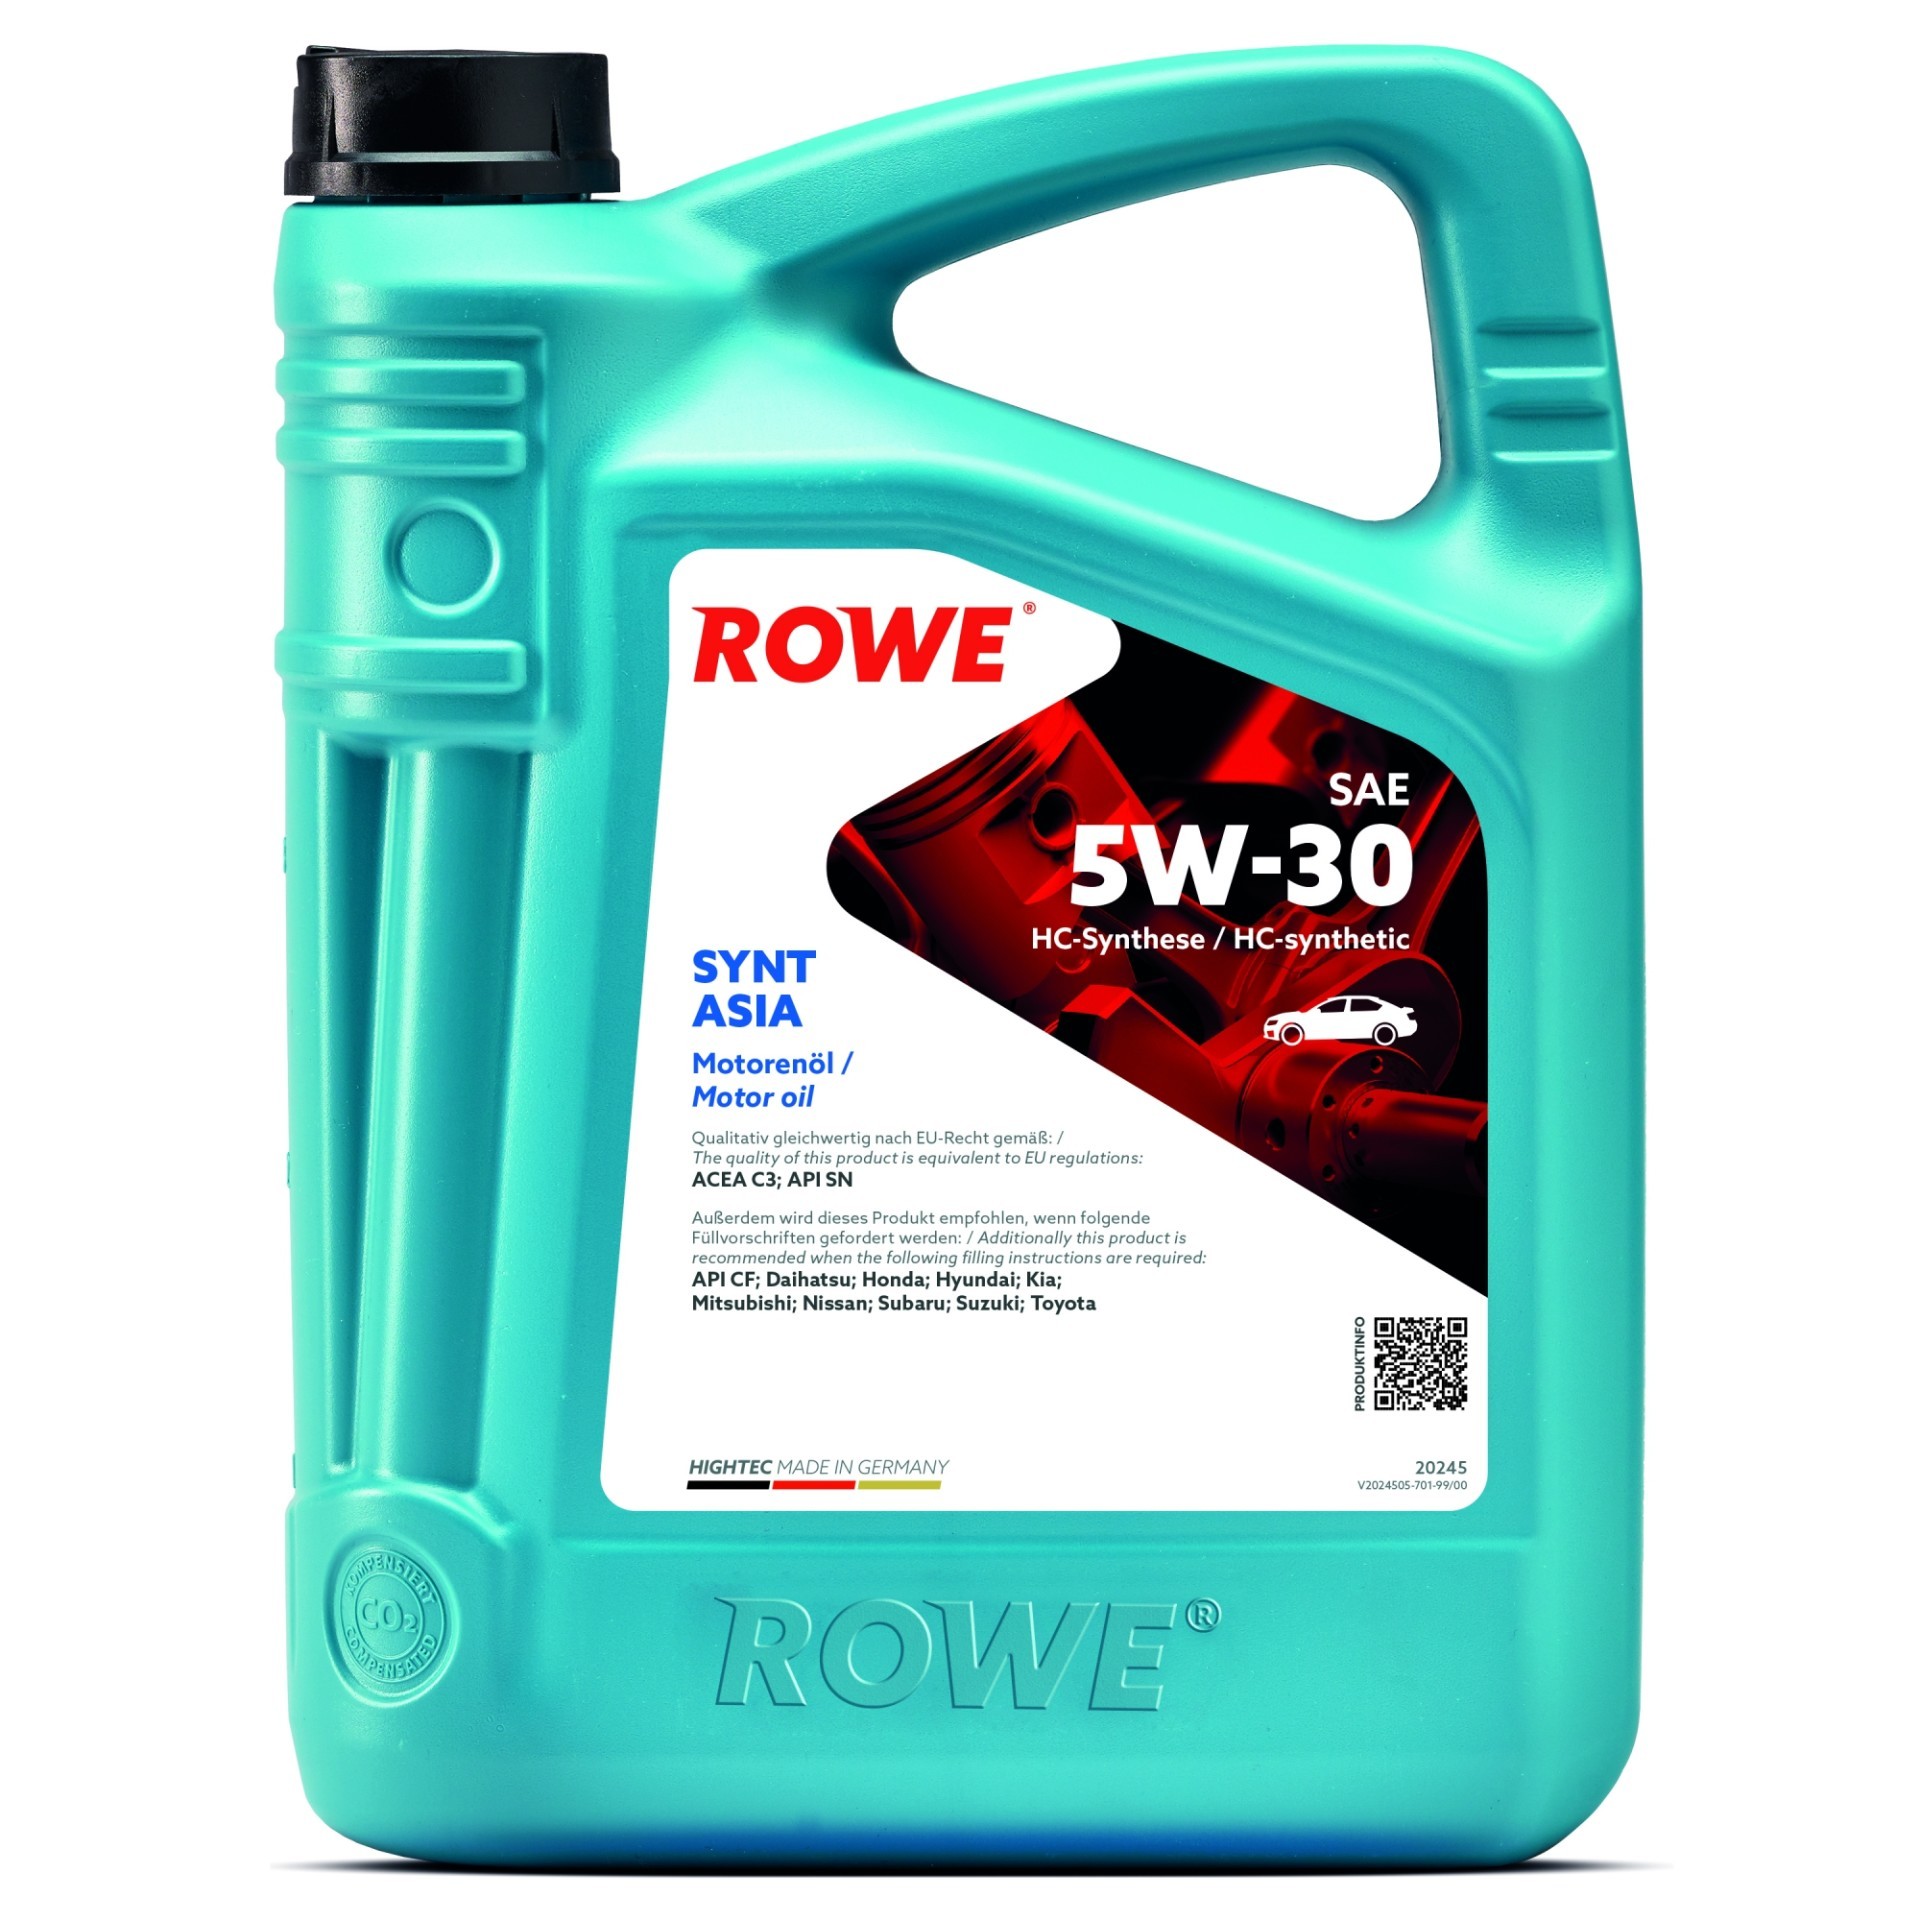 ROWE HIGHTEC SYNT ASIA SAE 5W-30 (20245) Teilsynthetiköl 5 L (20245-0050-99)